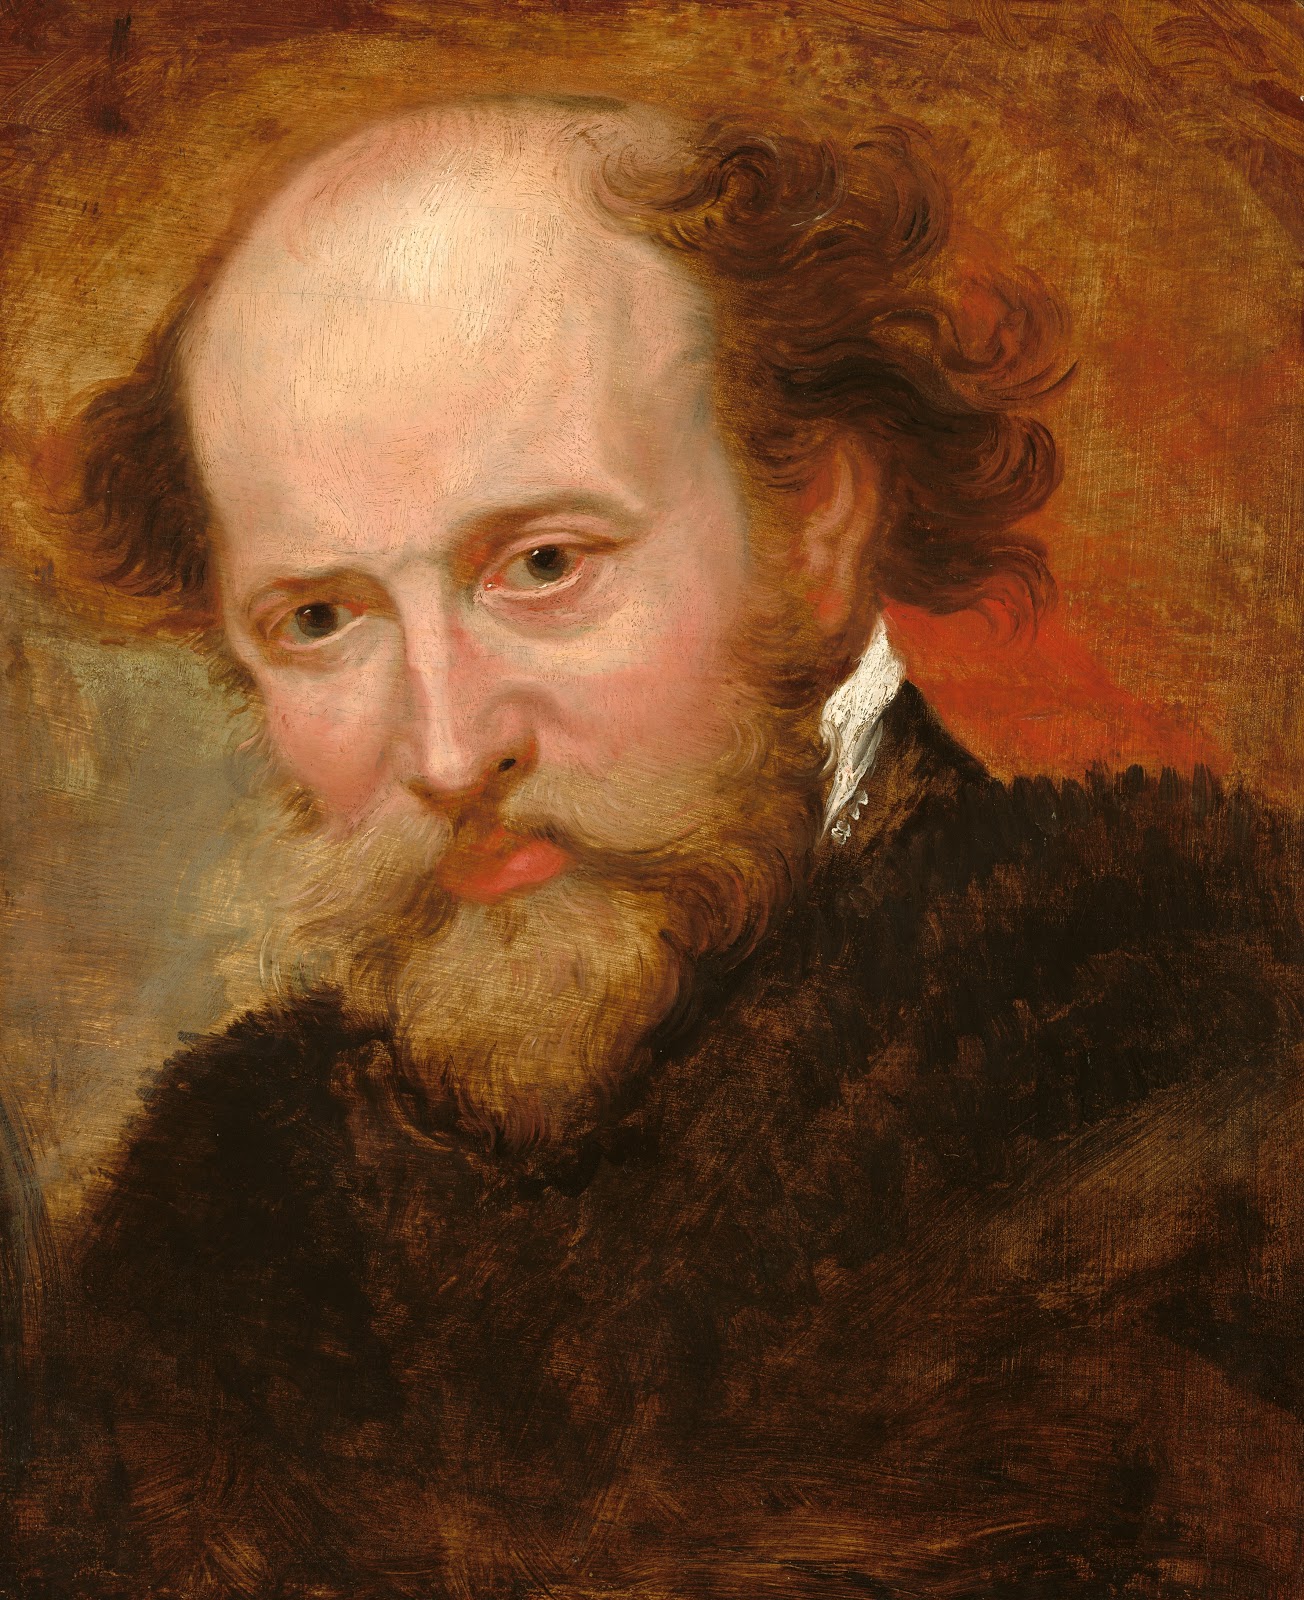 Peter+Paul+Rubens-1577-1640 (90).jpg